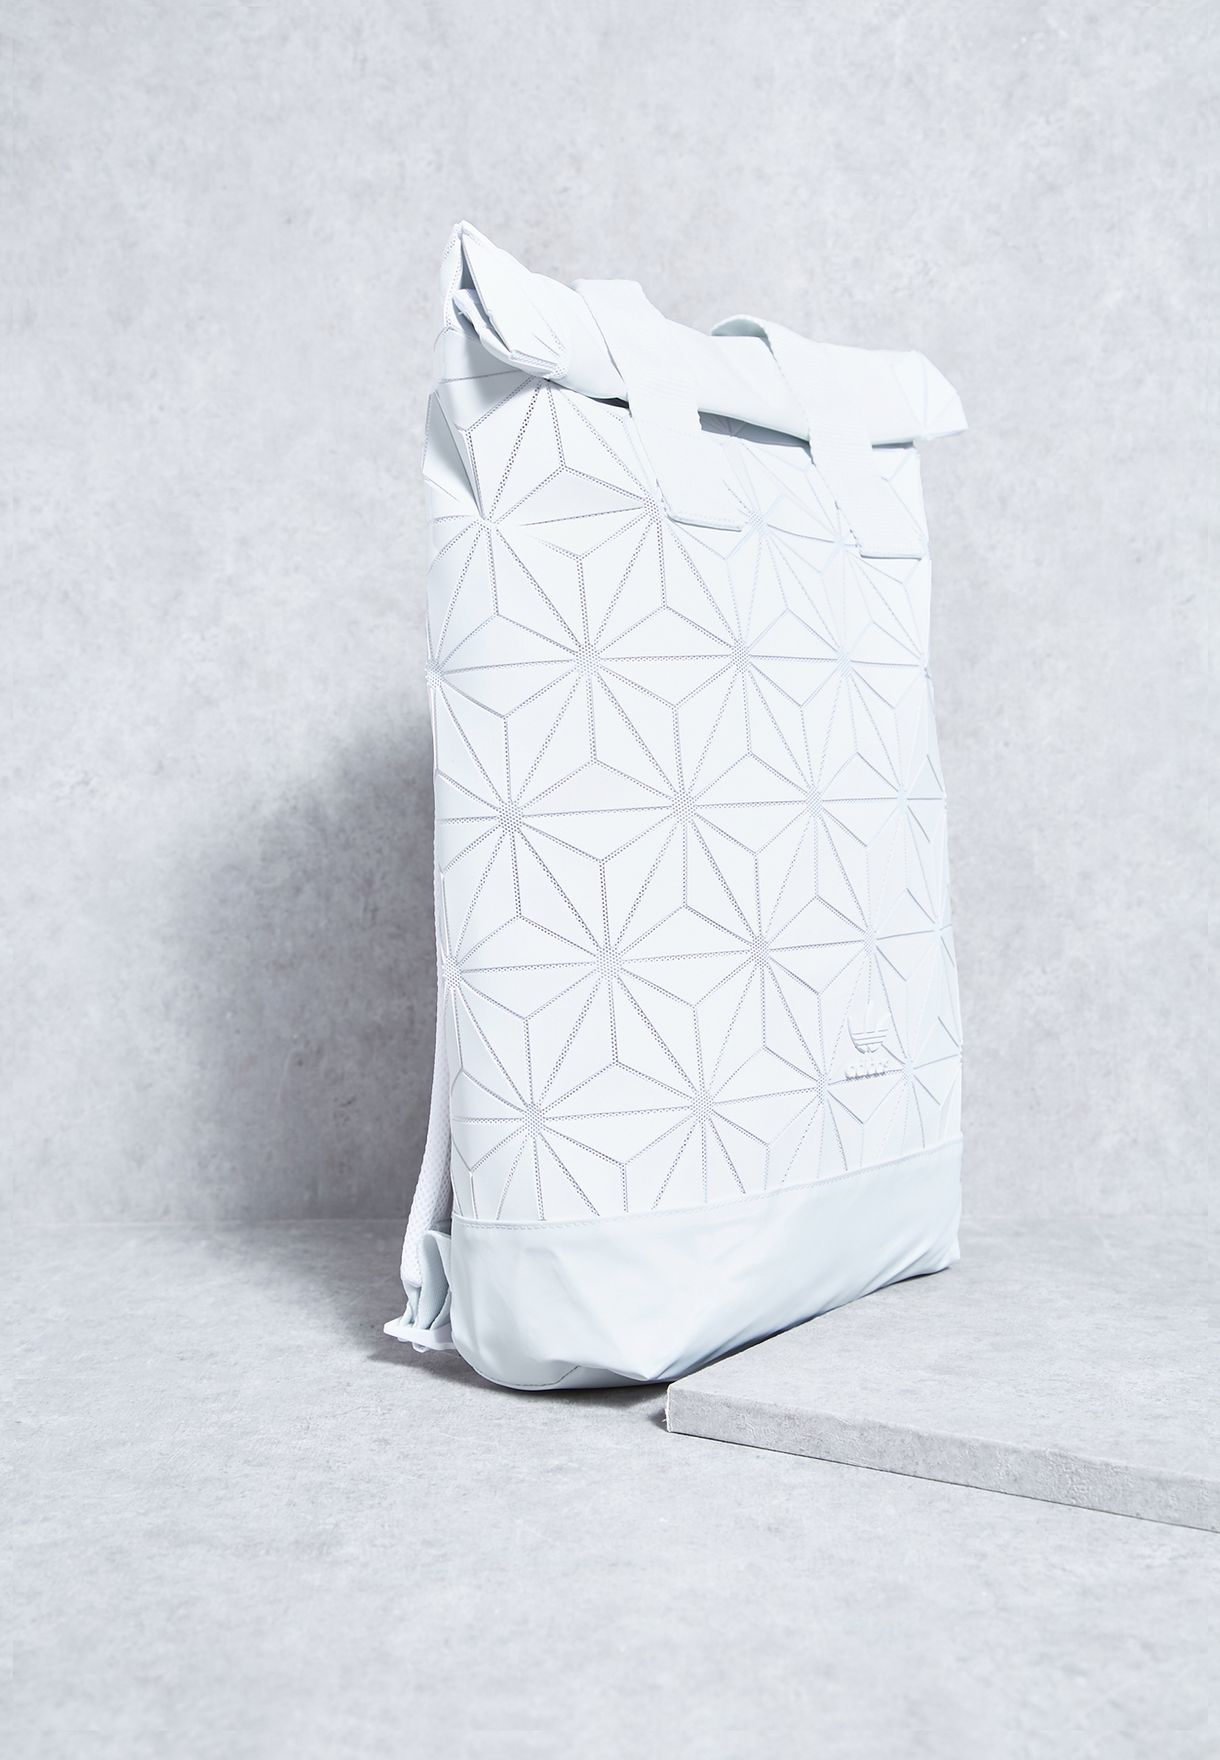 adidas 3d bag white